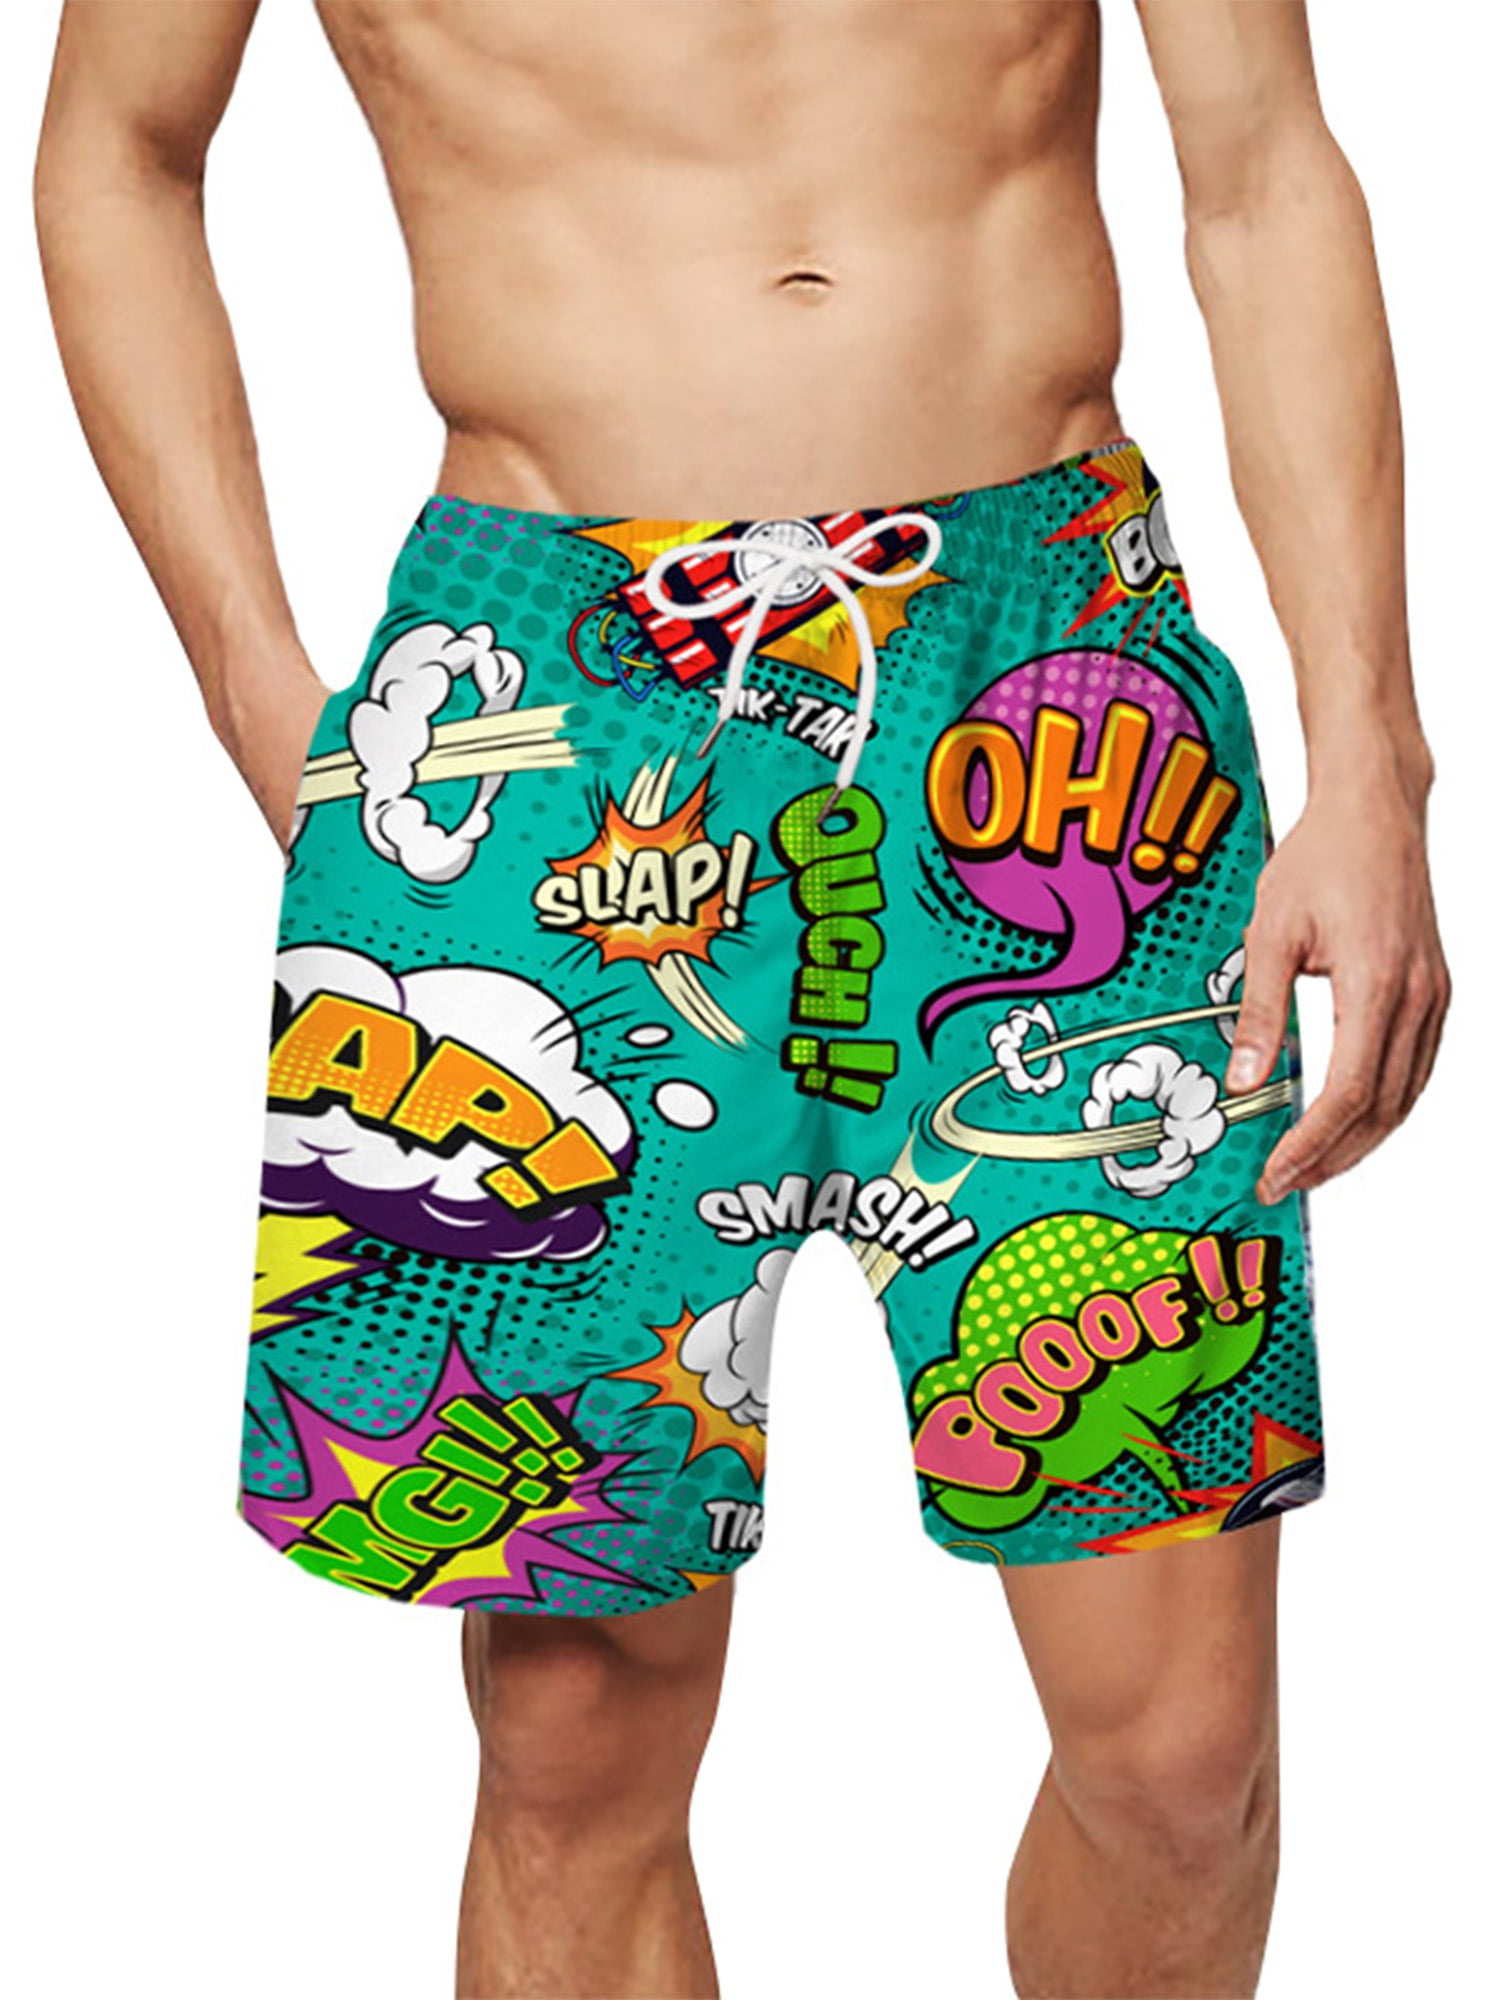 MOOKO Mens Summer Swim Trunks Quick Dry Beach Board Swim Shorts Elastic Waist Swimsuit Swimwear Bathing Suit with Pockets 